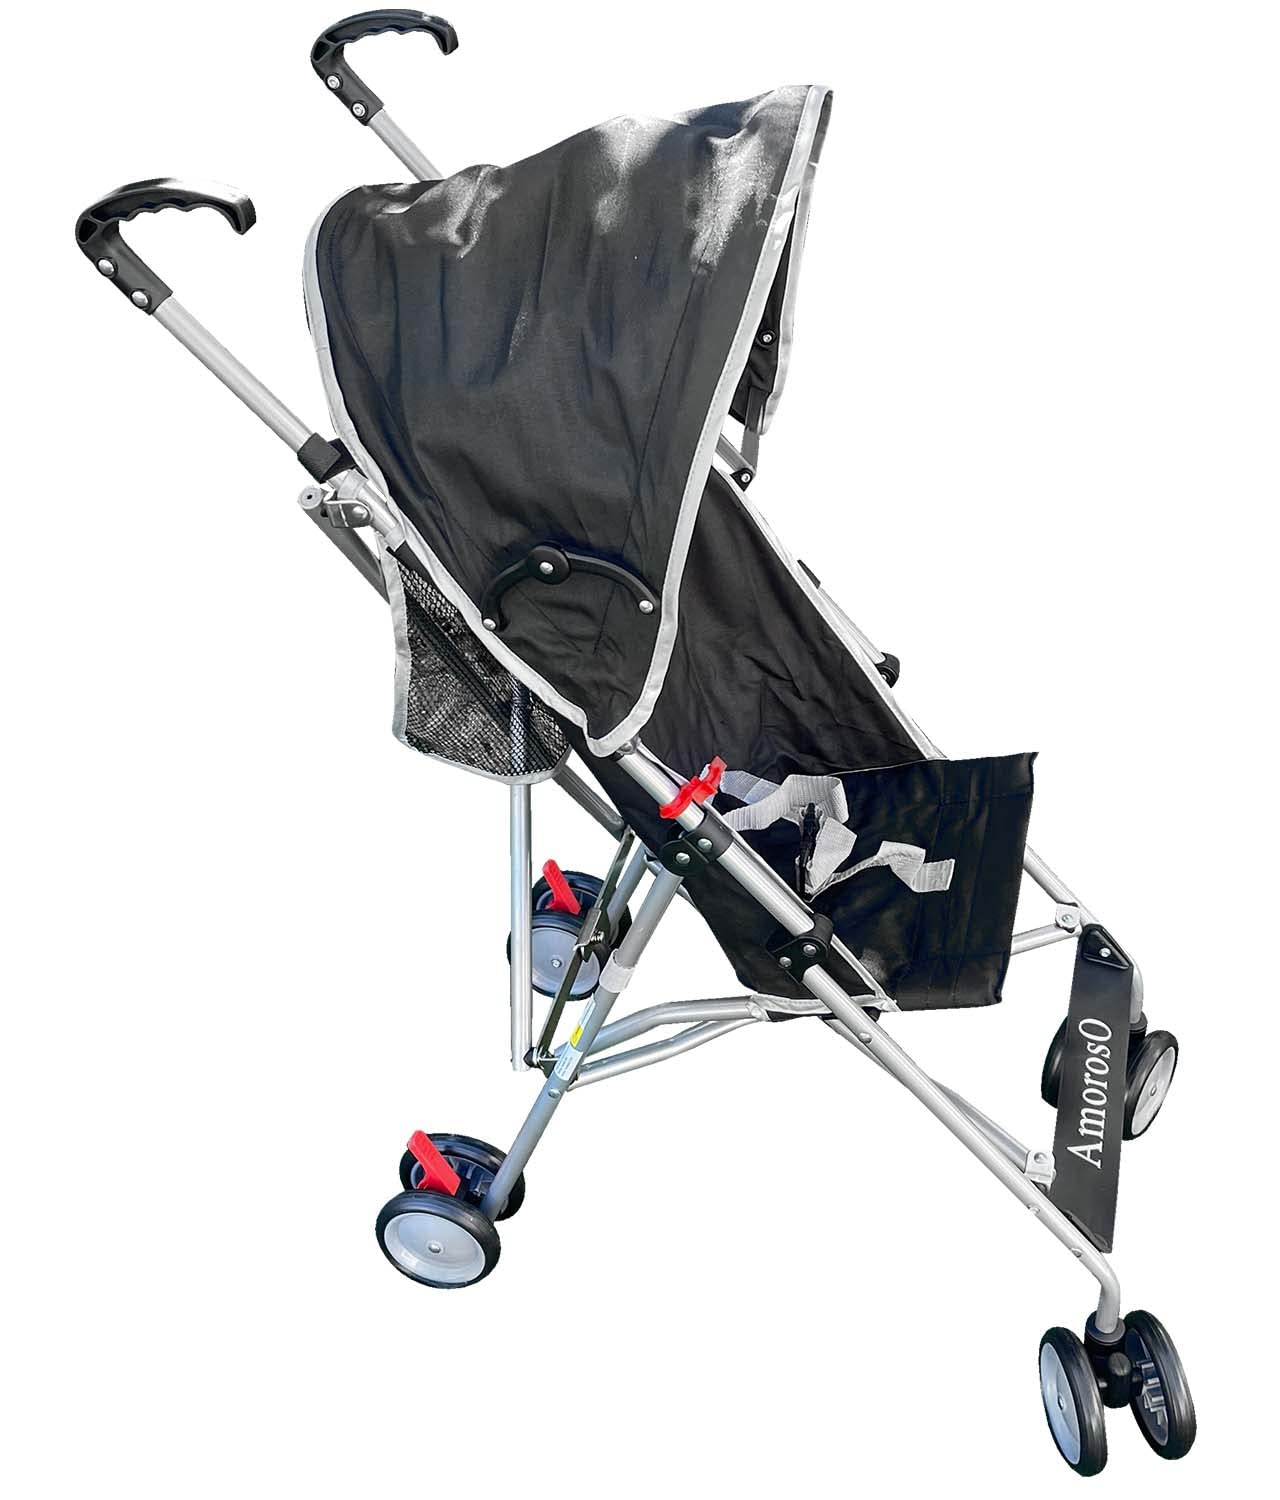 AmorosO Baby Umbrella Stroller 12005R, Black